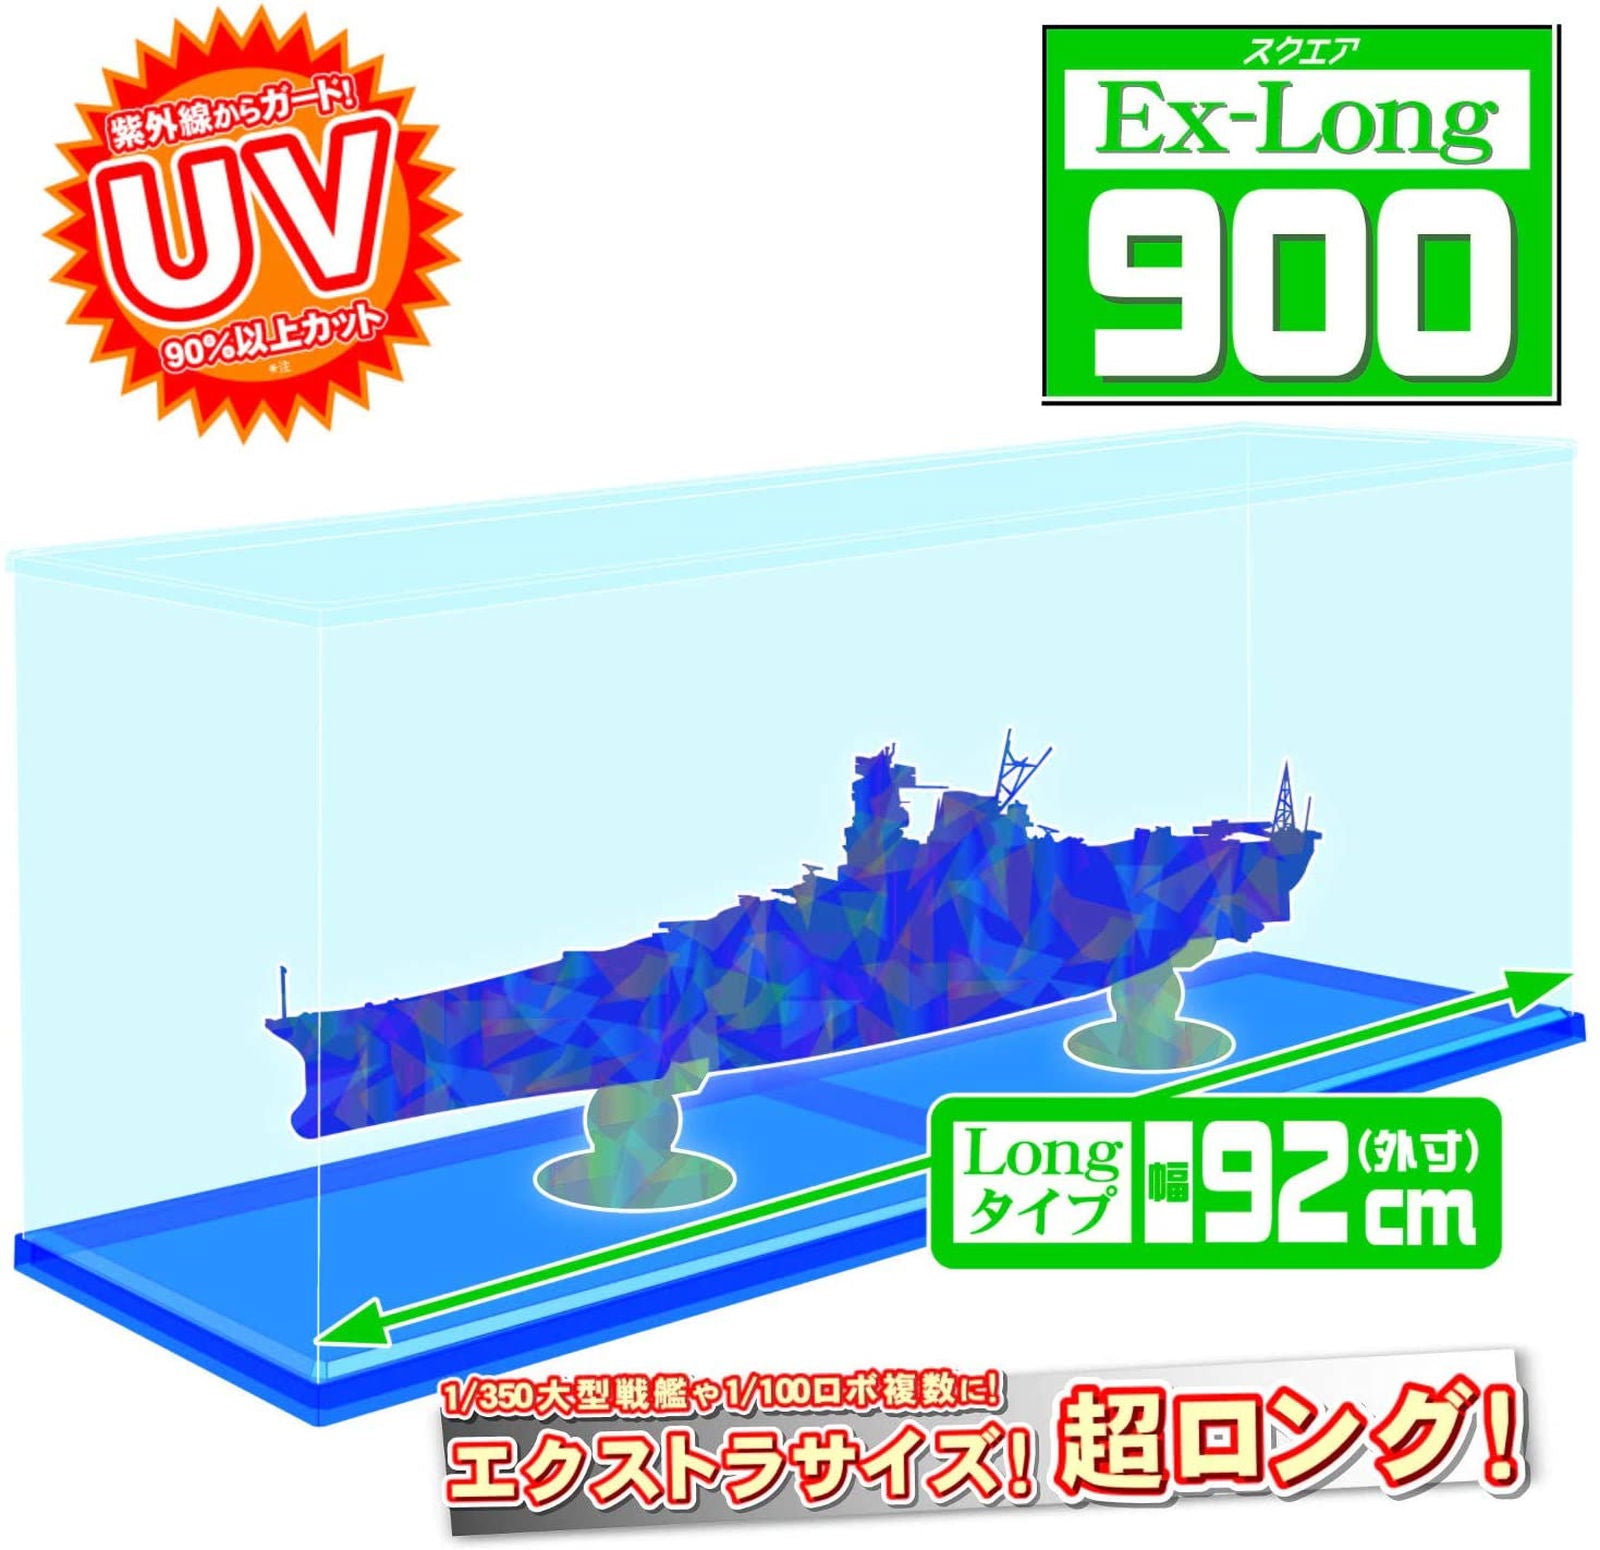 Hobby Base PPC-KU26MB Model Cover UV Cut Ex-Long 900 M Blue Clear - BanzaiHobby